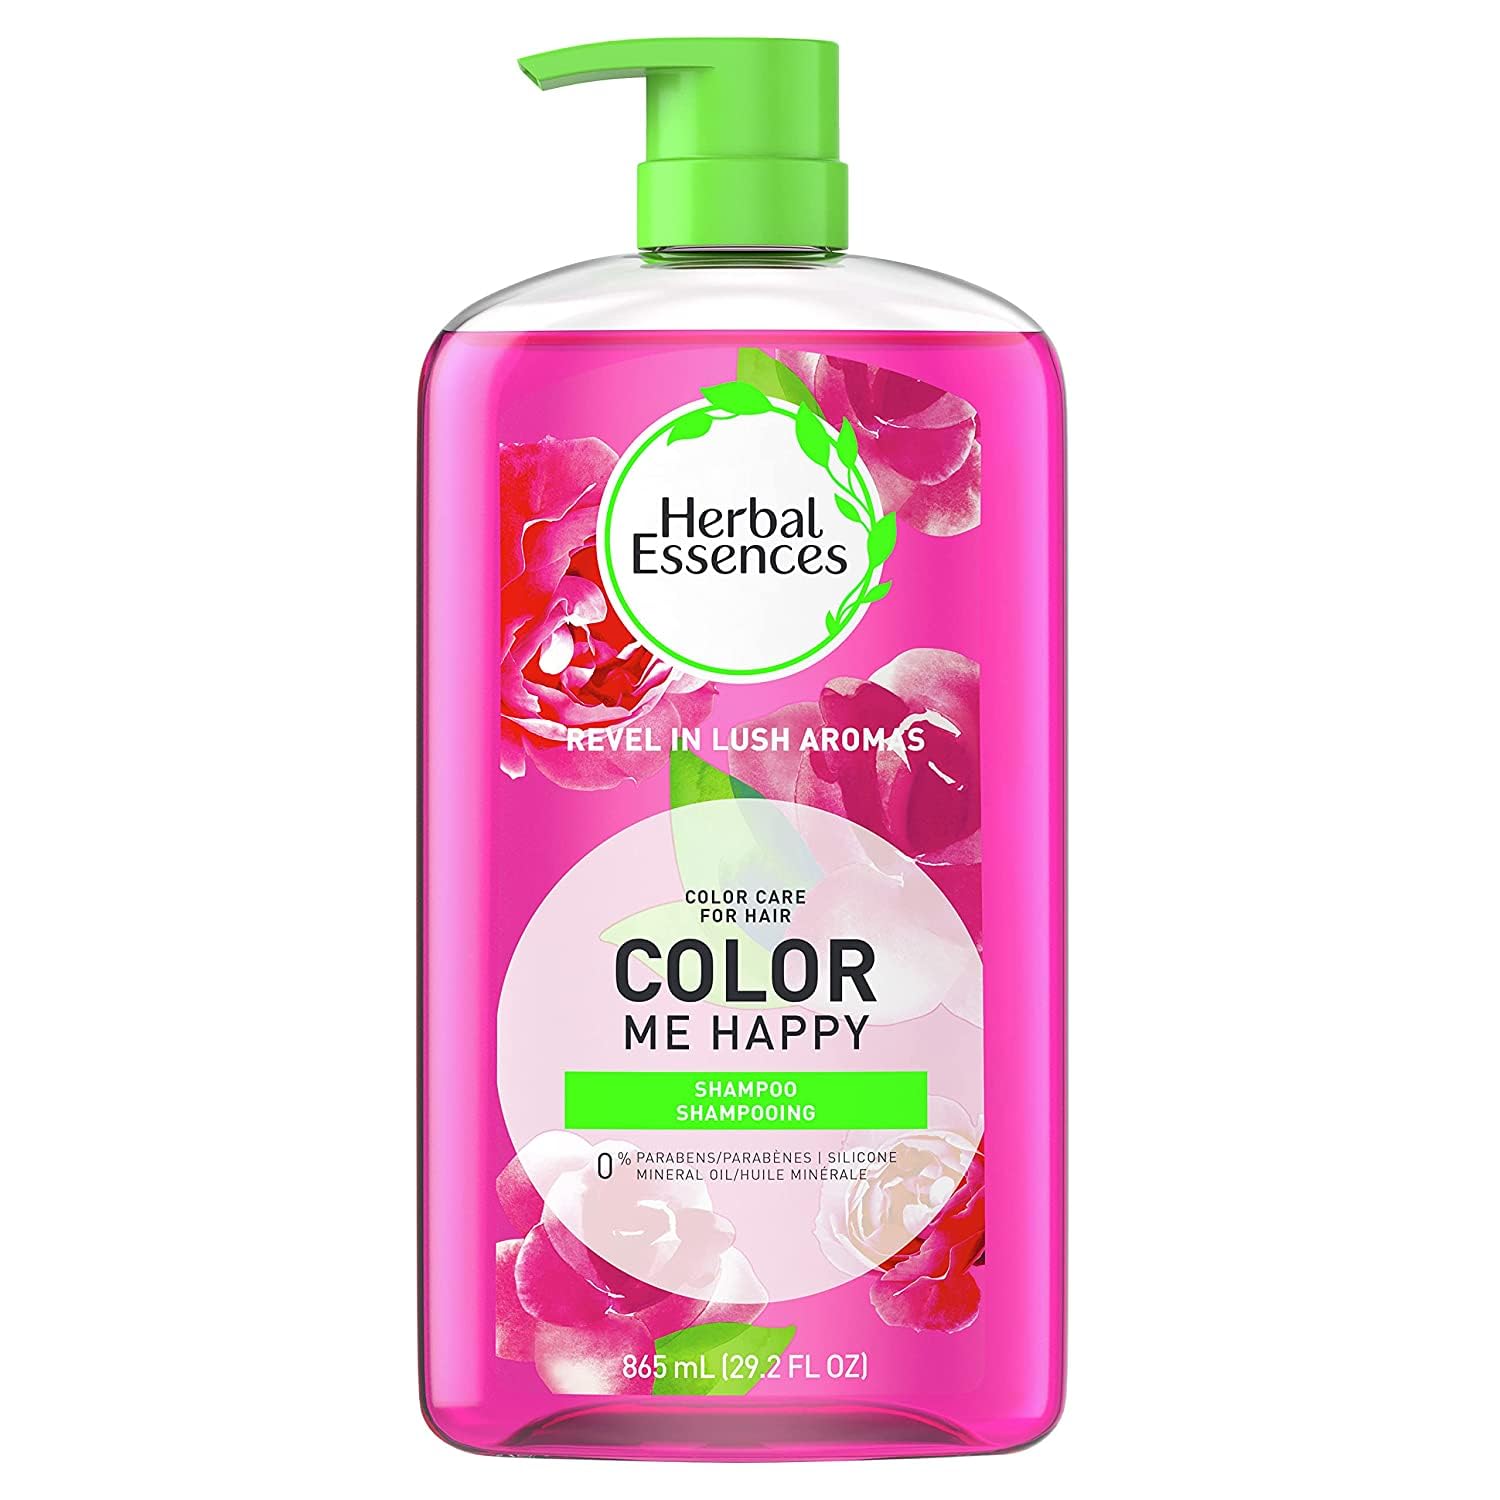 Herbal Essences Shampoo for Colored Hair, Paraben-Free, Color Me Happy, 29.2 fl oz